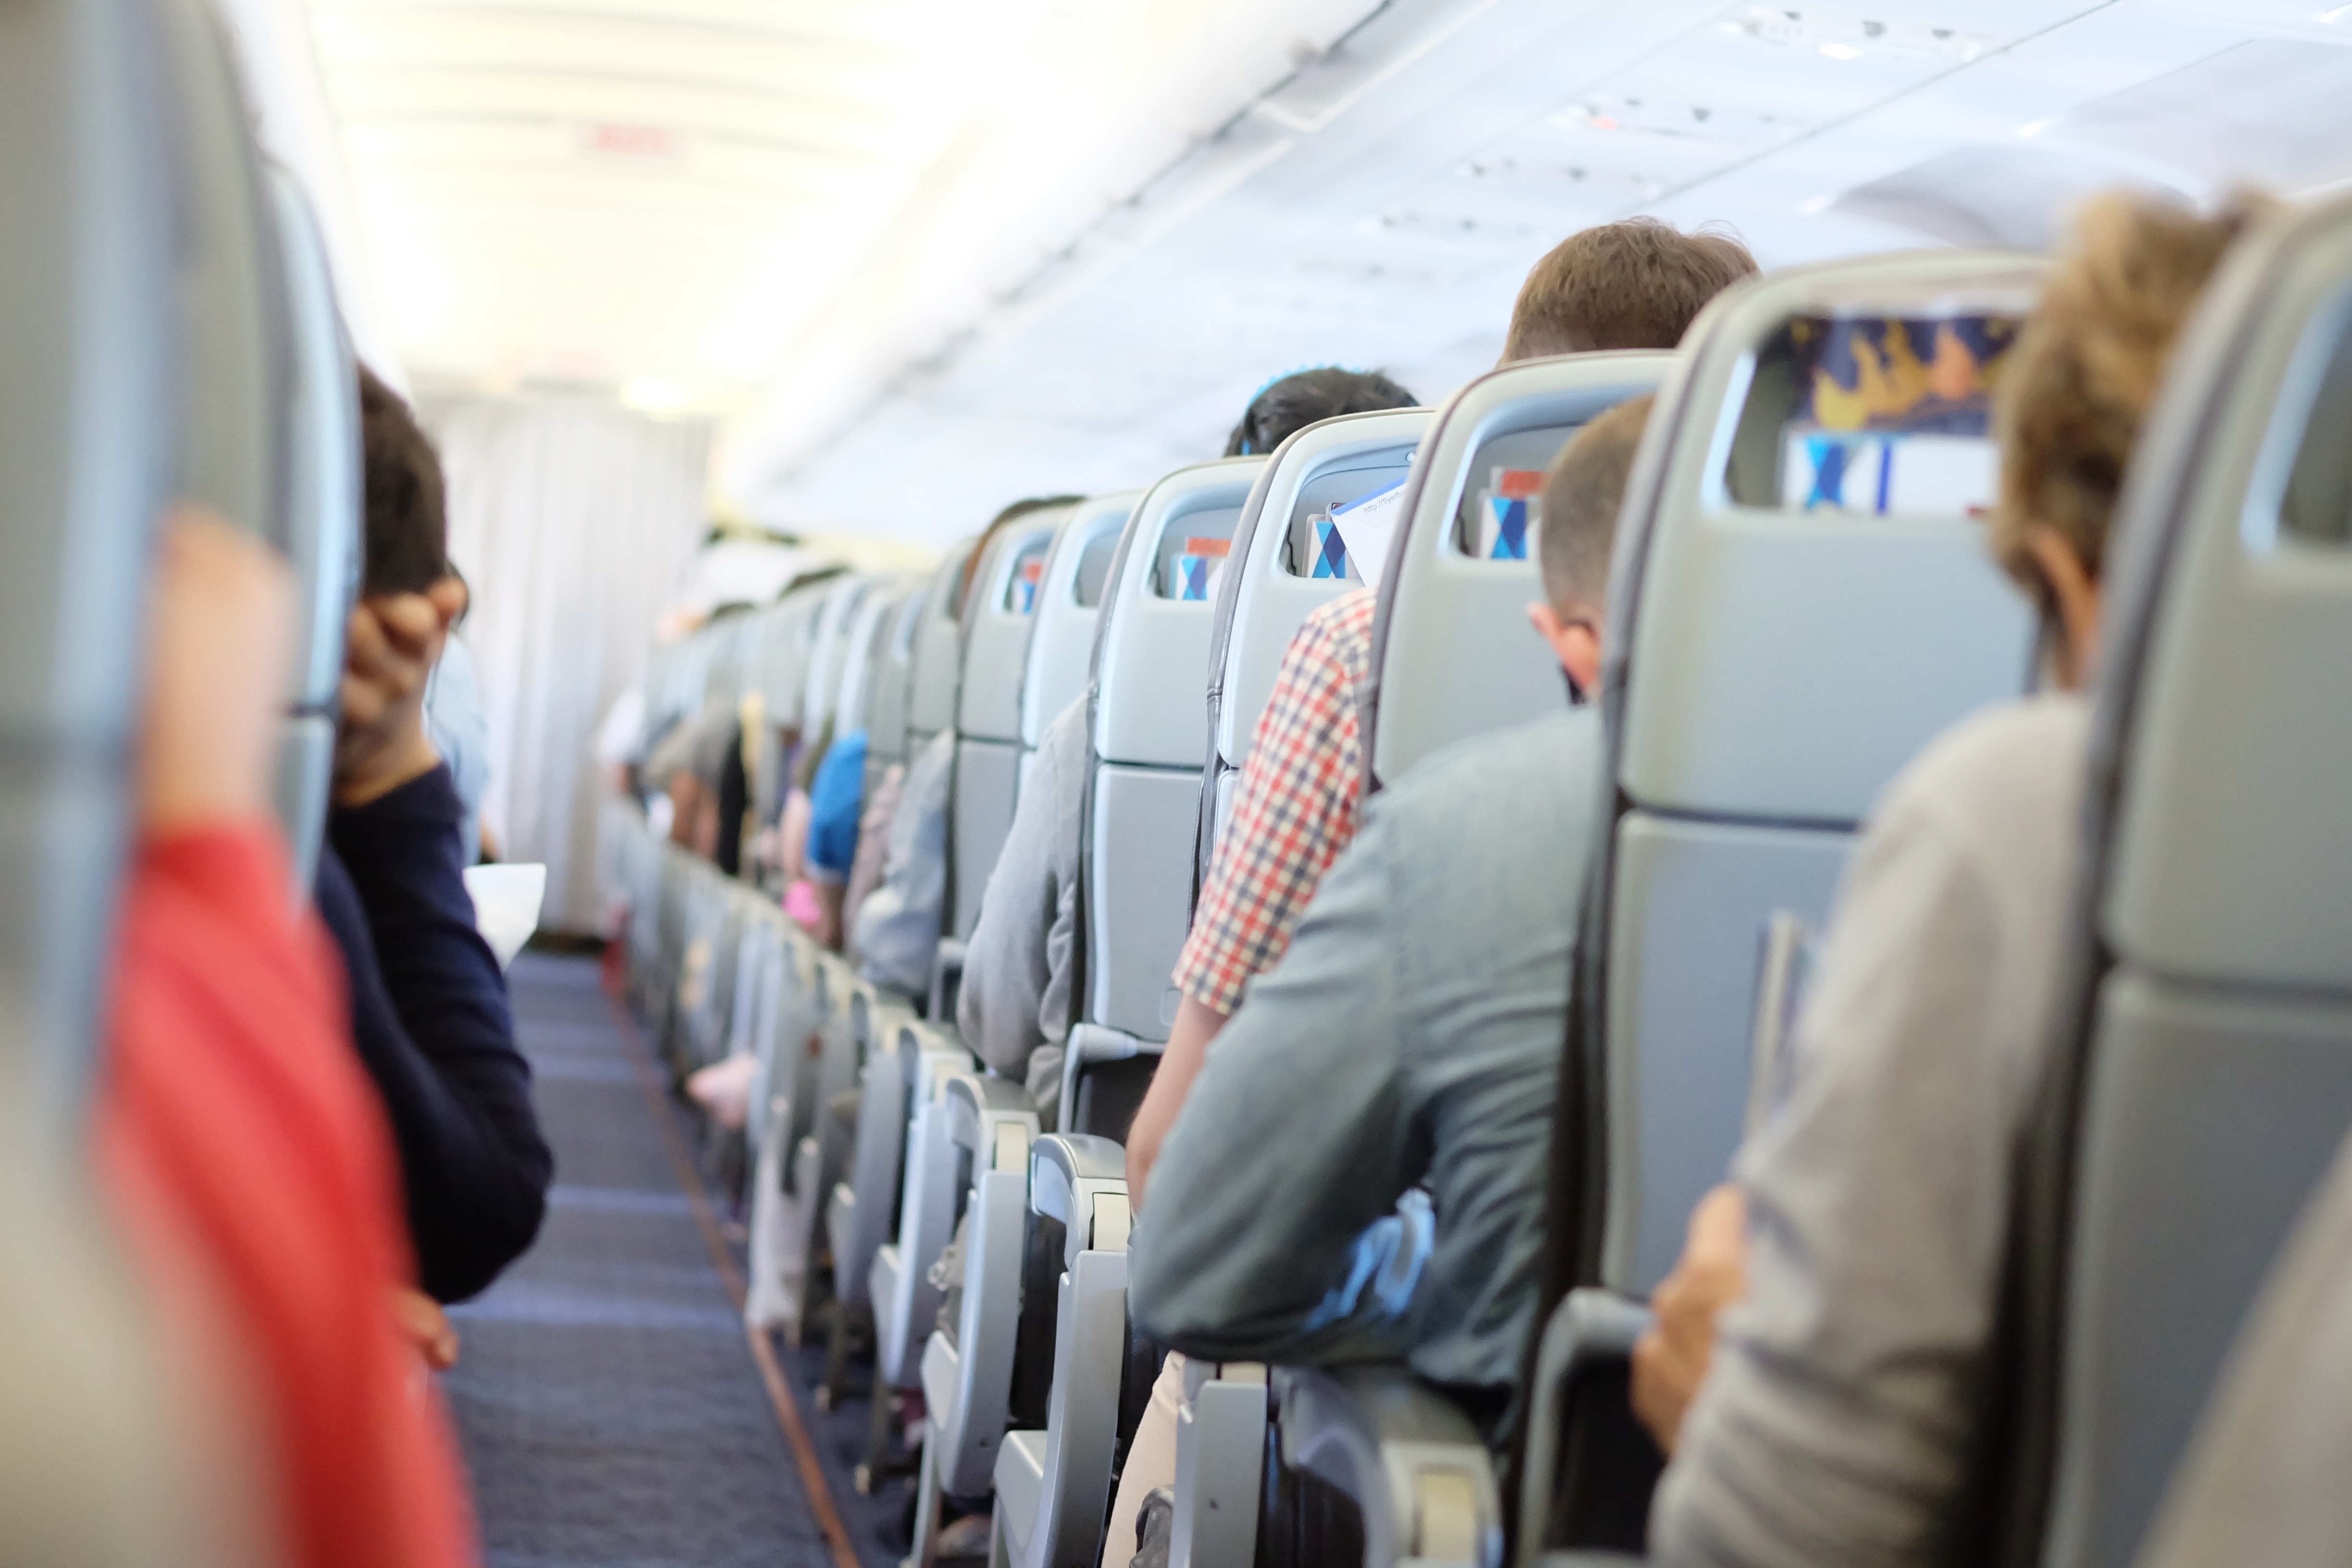 Passengers on a plane | Source: Shutterstock